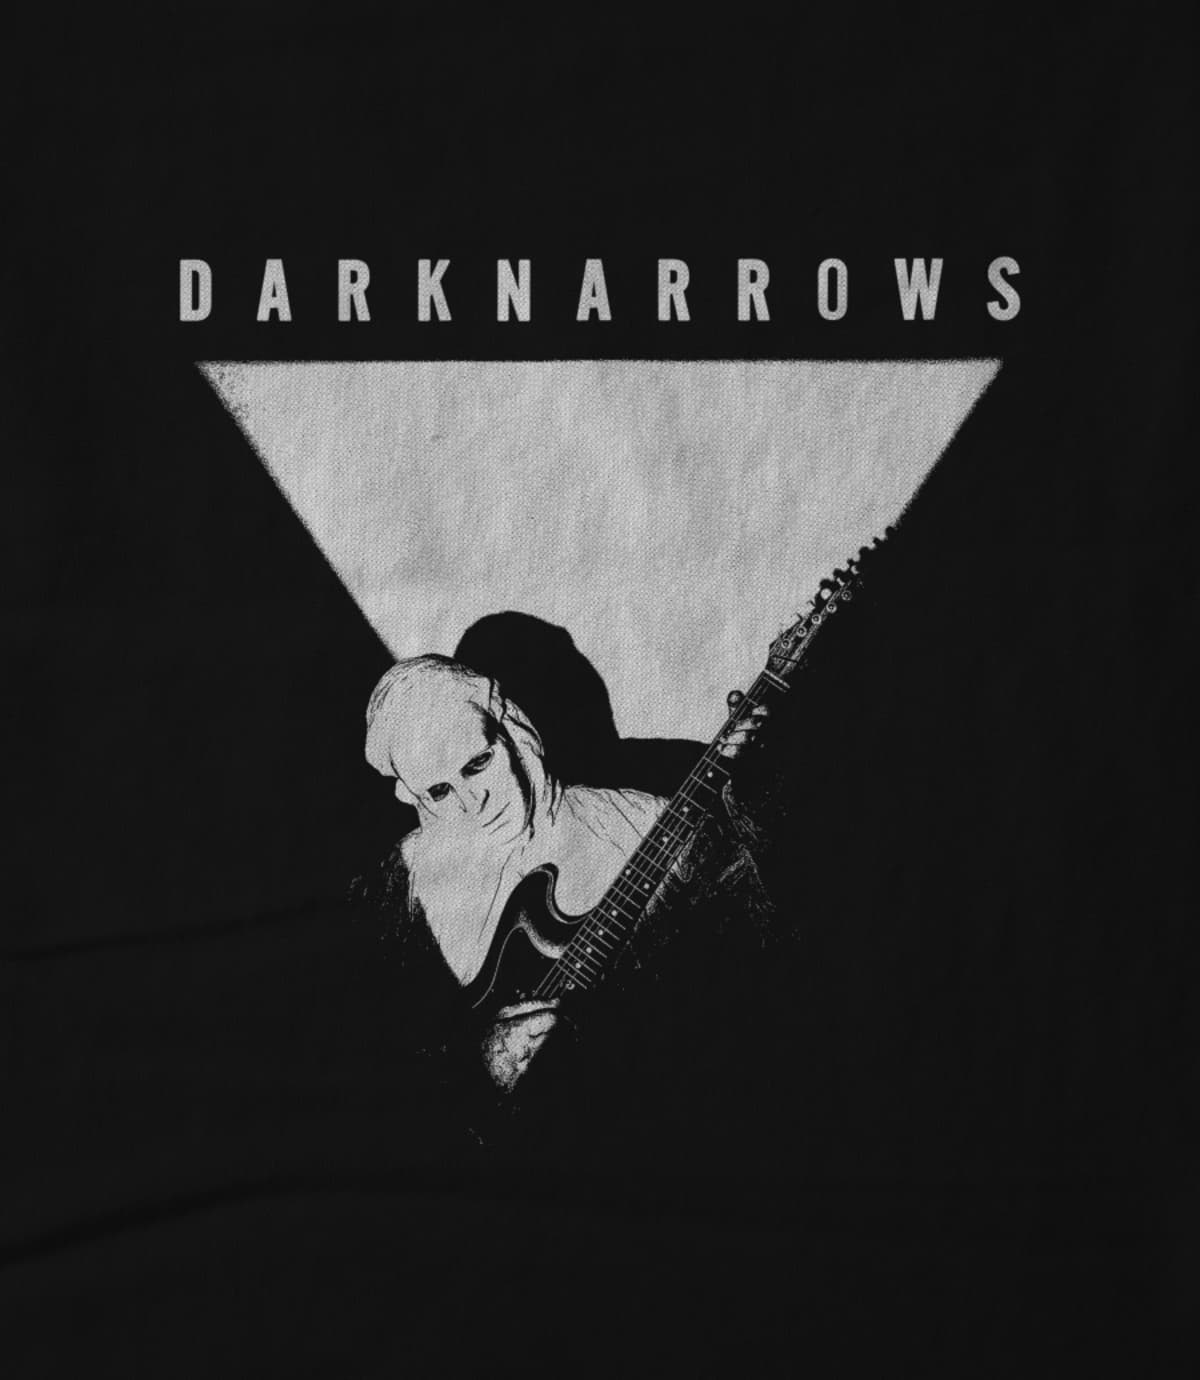 Dark Narrows